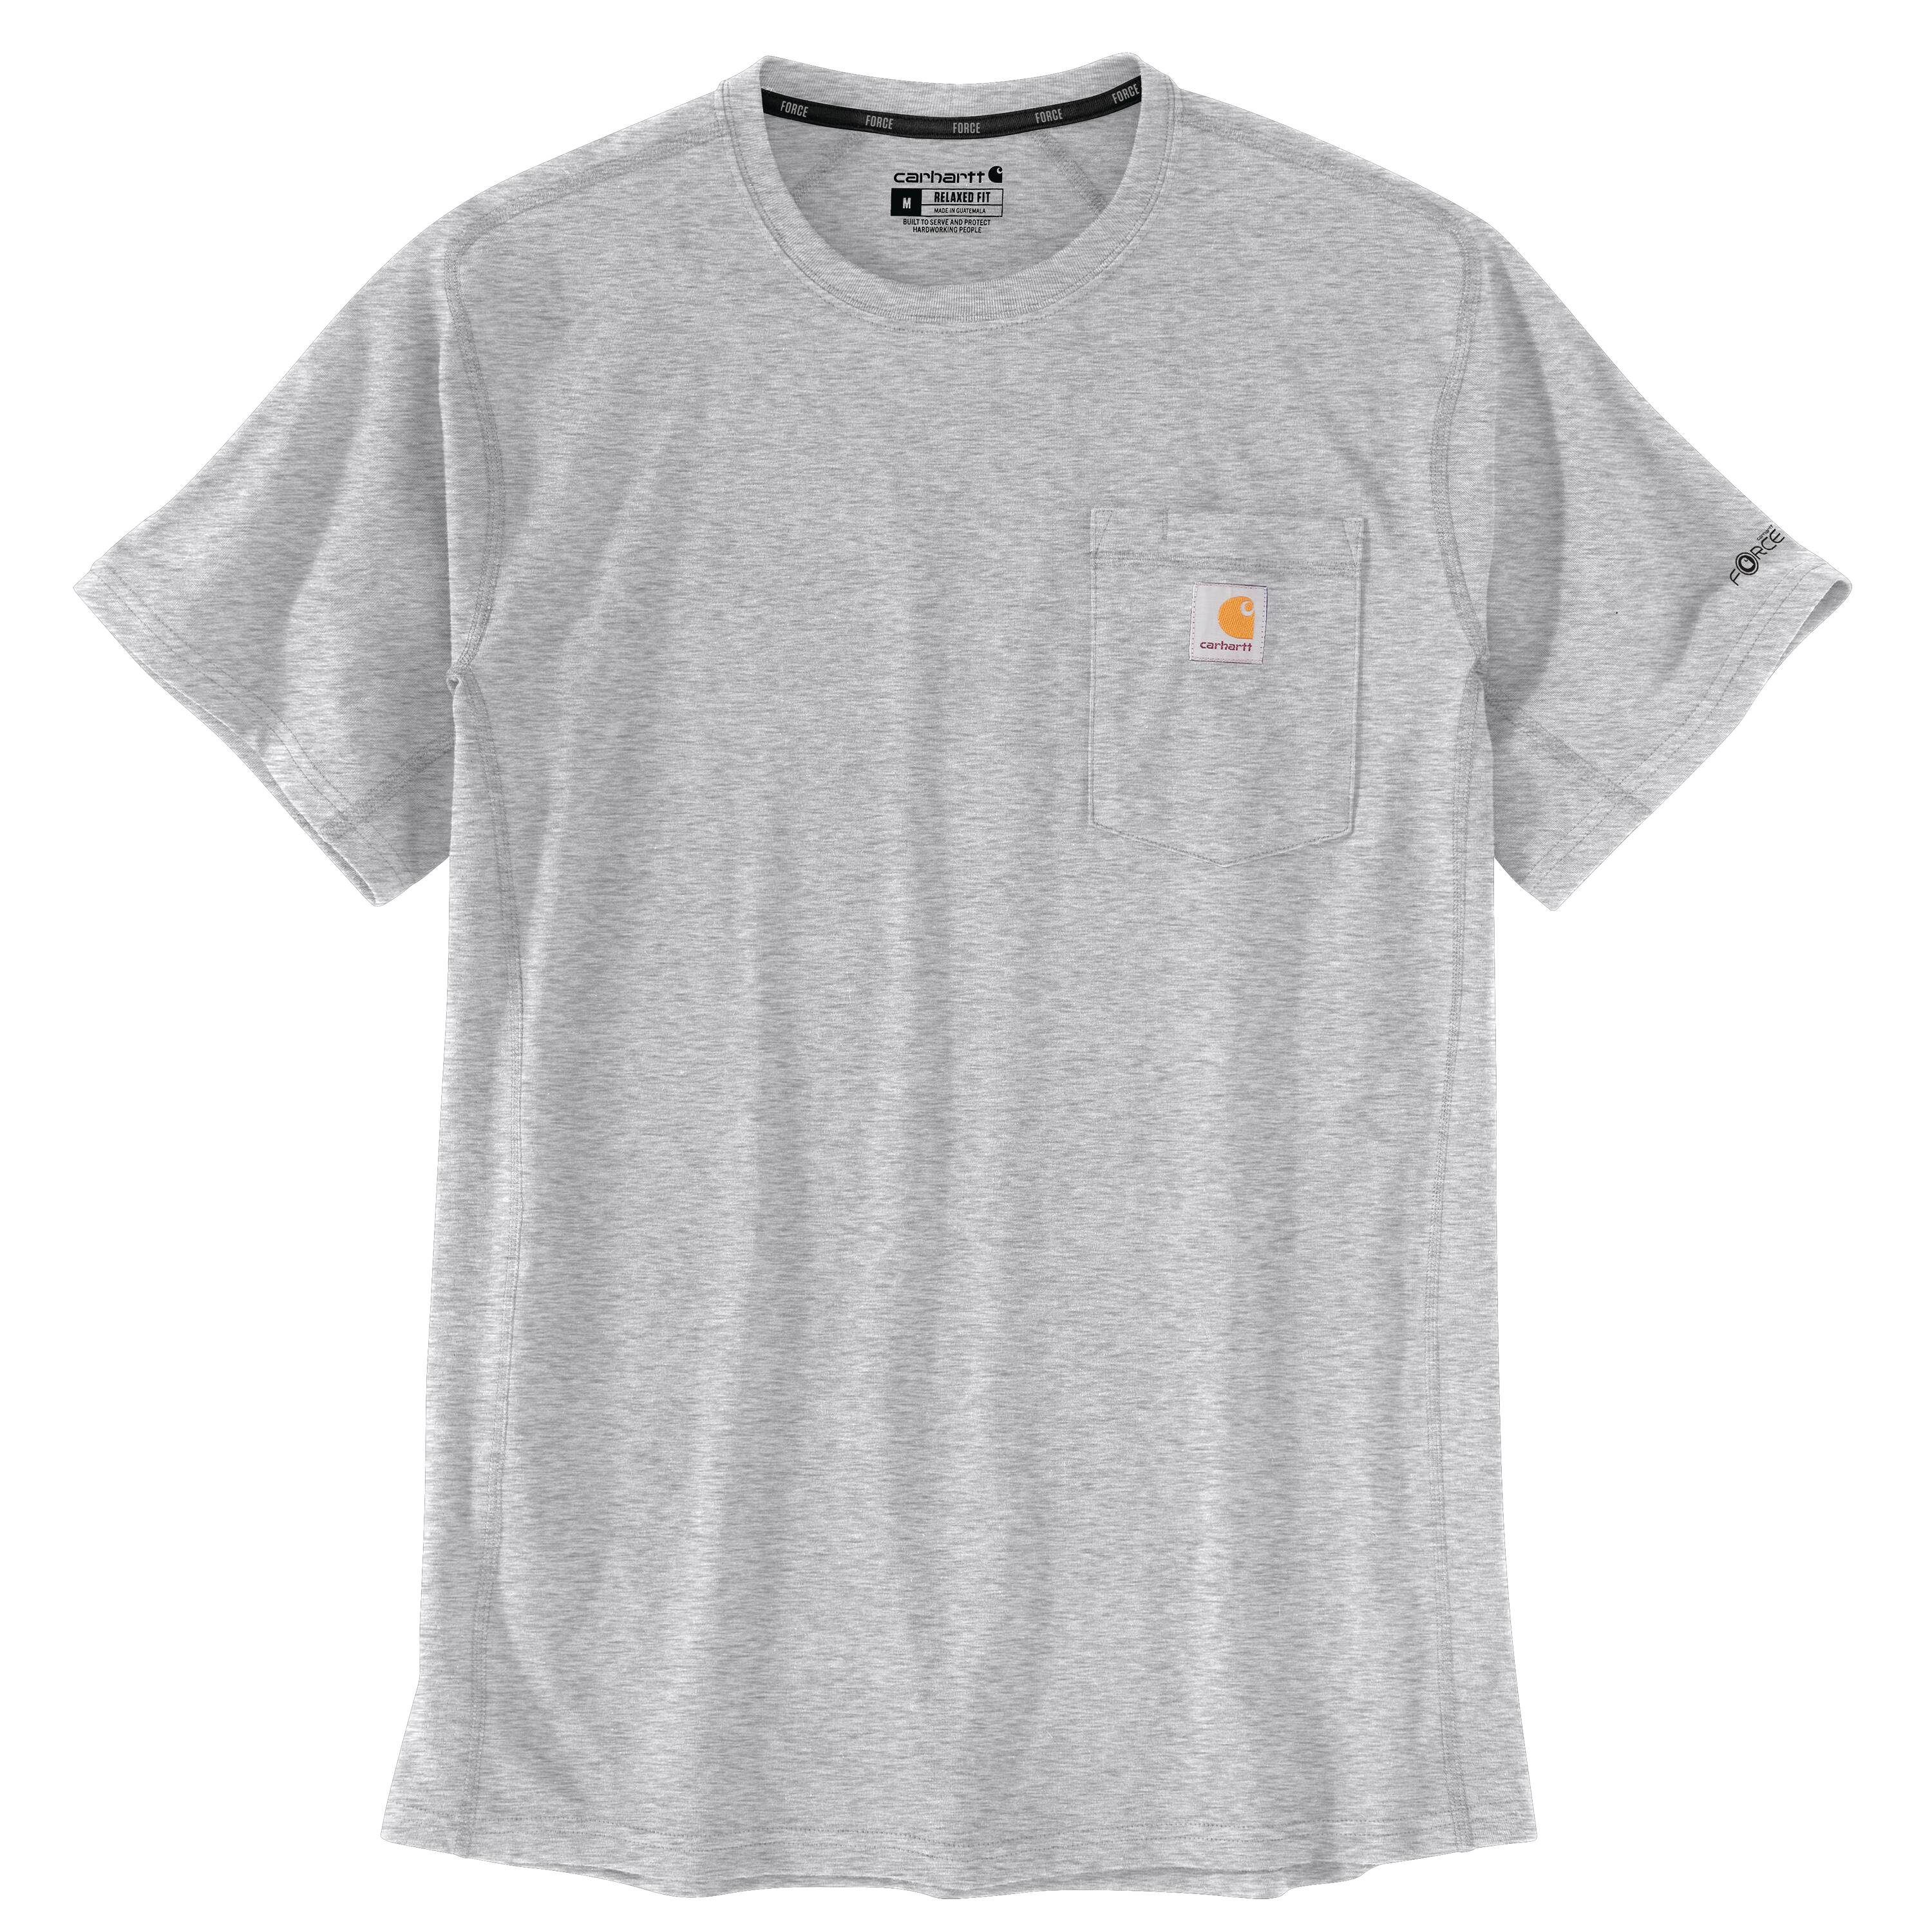 Carhartt Men's Jersey Short Sleeve T-shirt (X-large) in the Tops